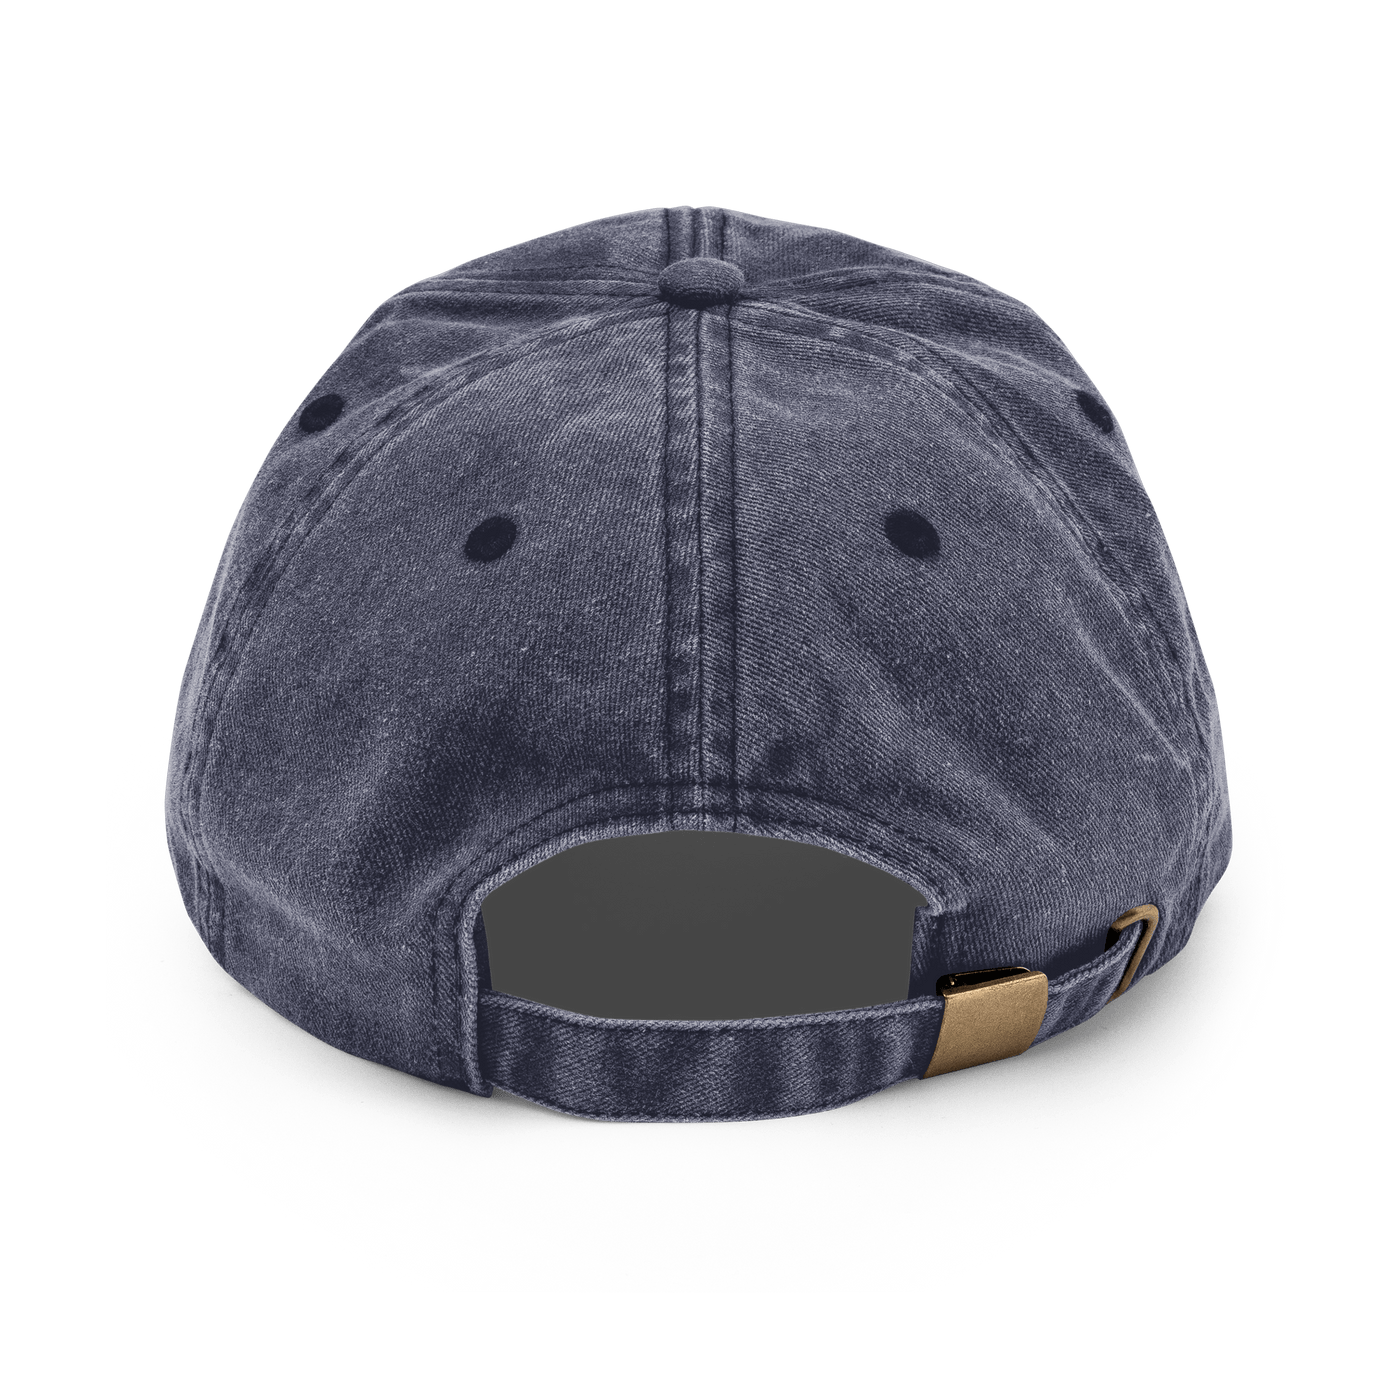 SOS Vintage Hat - Vintage Denim - Just Another Cap Store